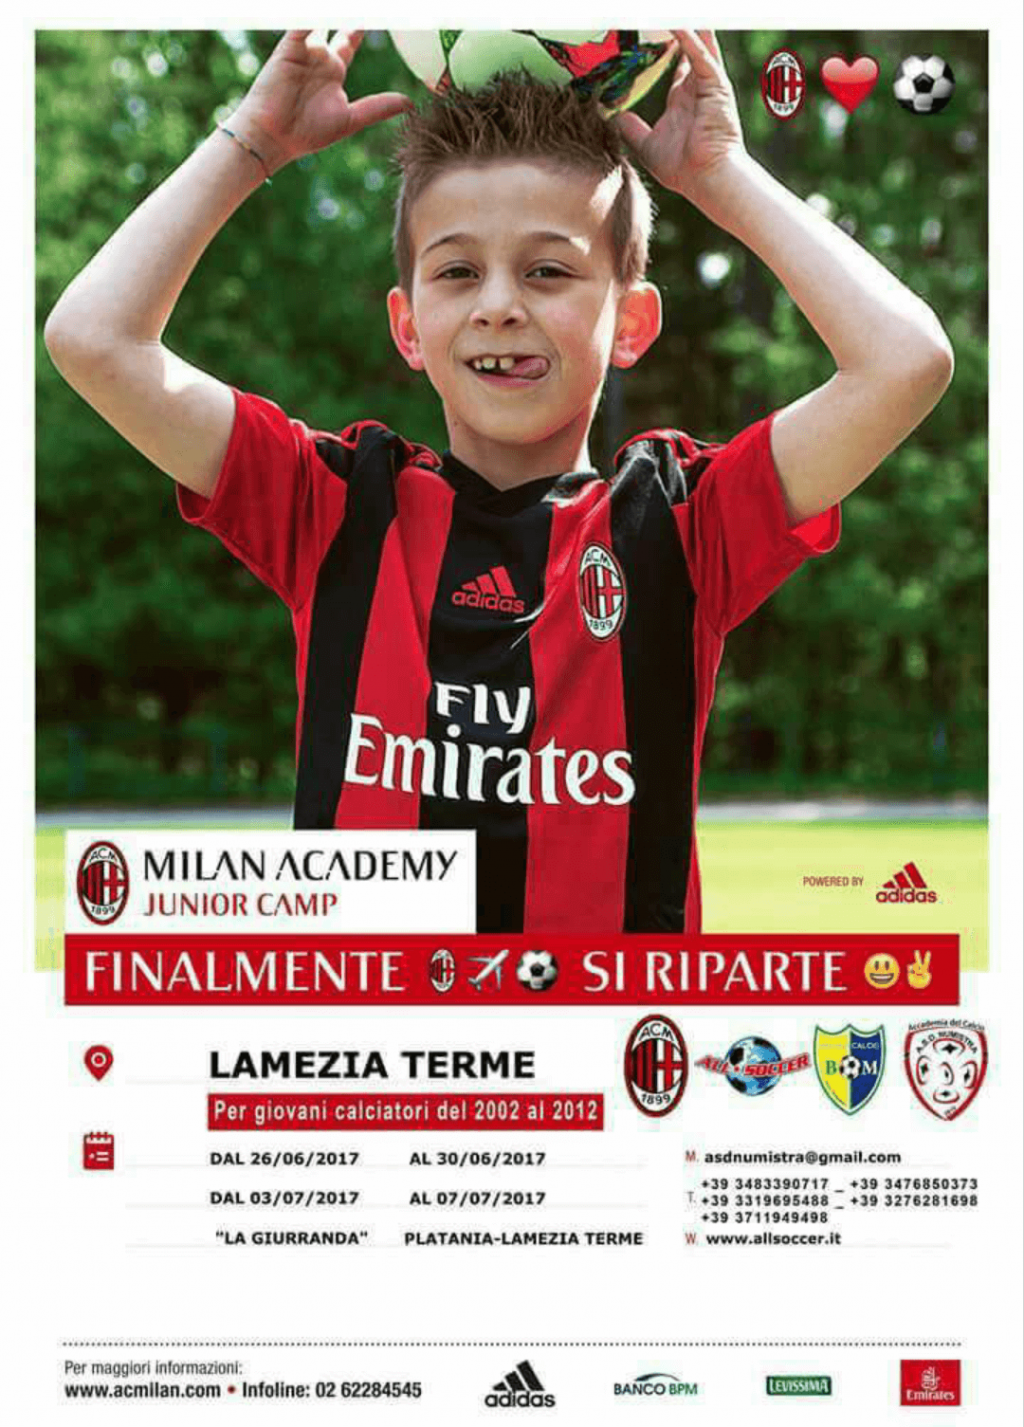 Milan Academy Junior Camp - LameziaTermeit